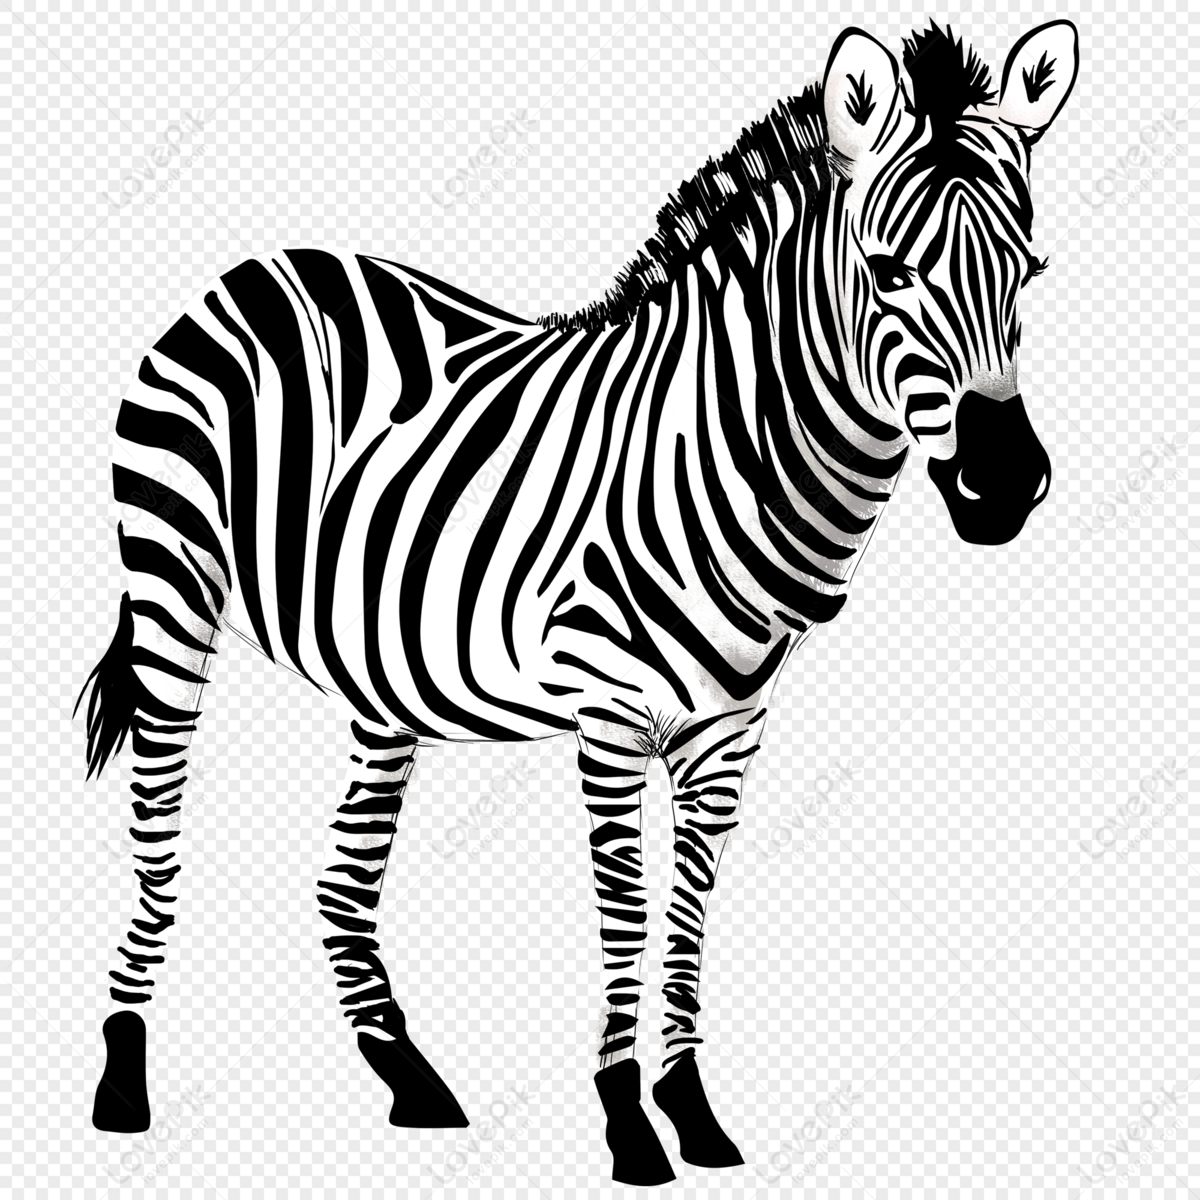 zebra-alphabet-images-hd-pictures-for-free-vectors-download-lovepik